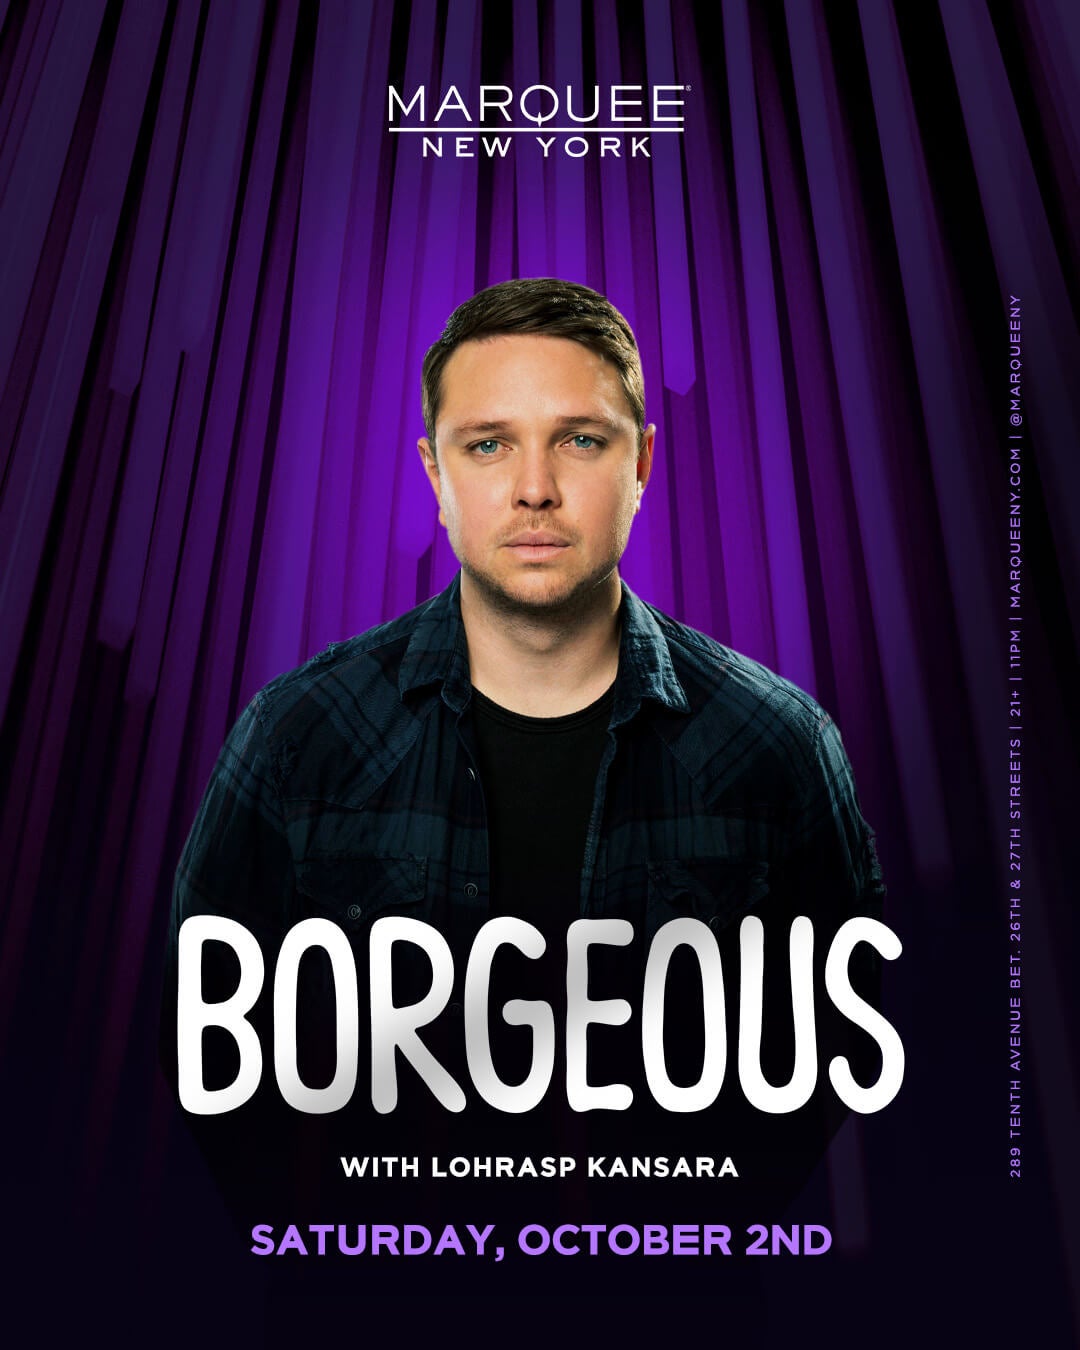 10/2/21 Borgeous – Marquee New York